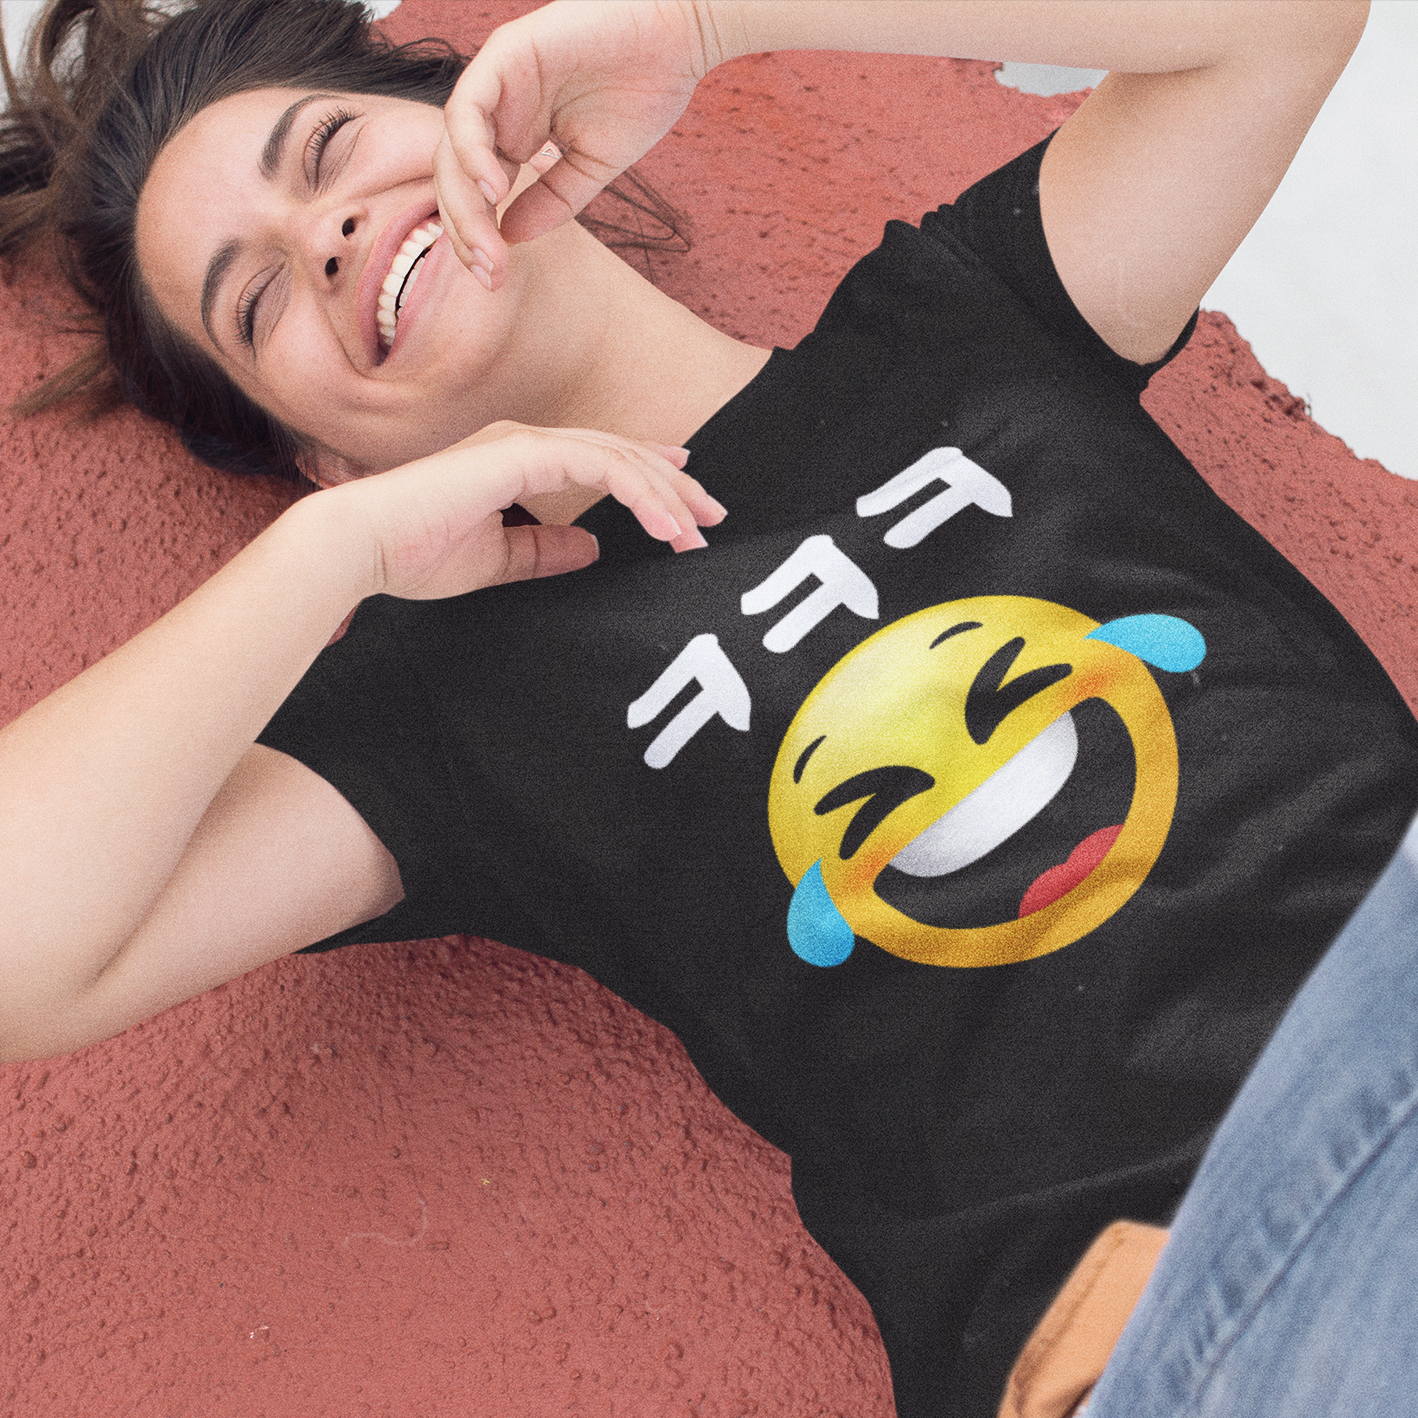 Emoji Laughing in Korean Hangul ㅋㅋㅋ (kekeke)-Unisex Jersey T-Shirt - Hot Like Kimchi